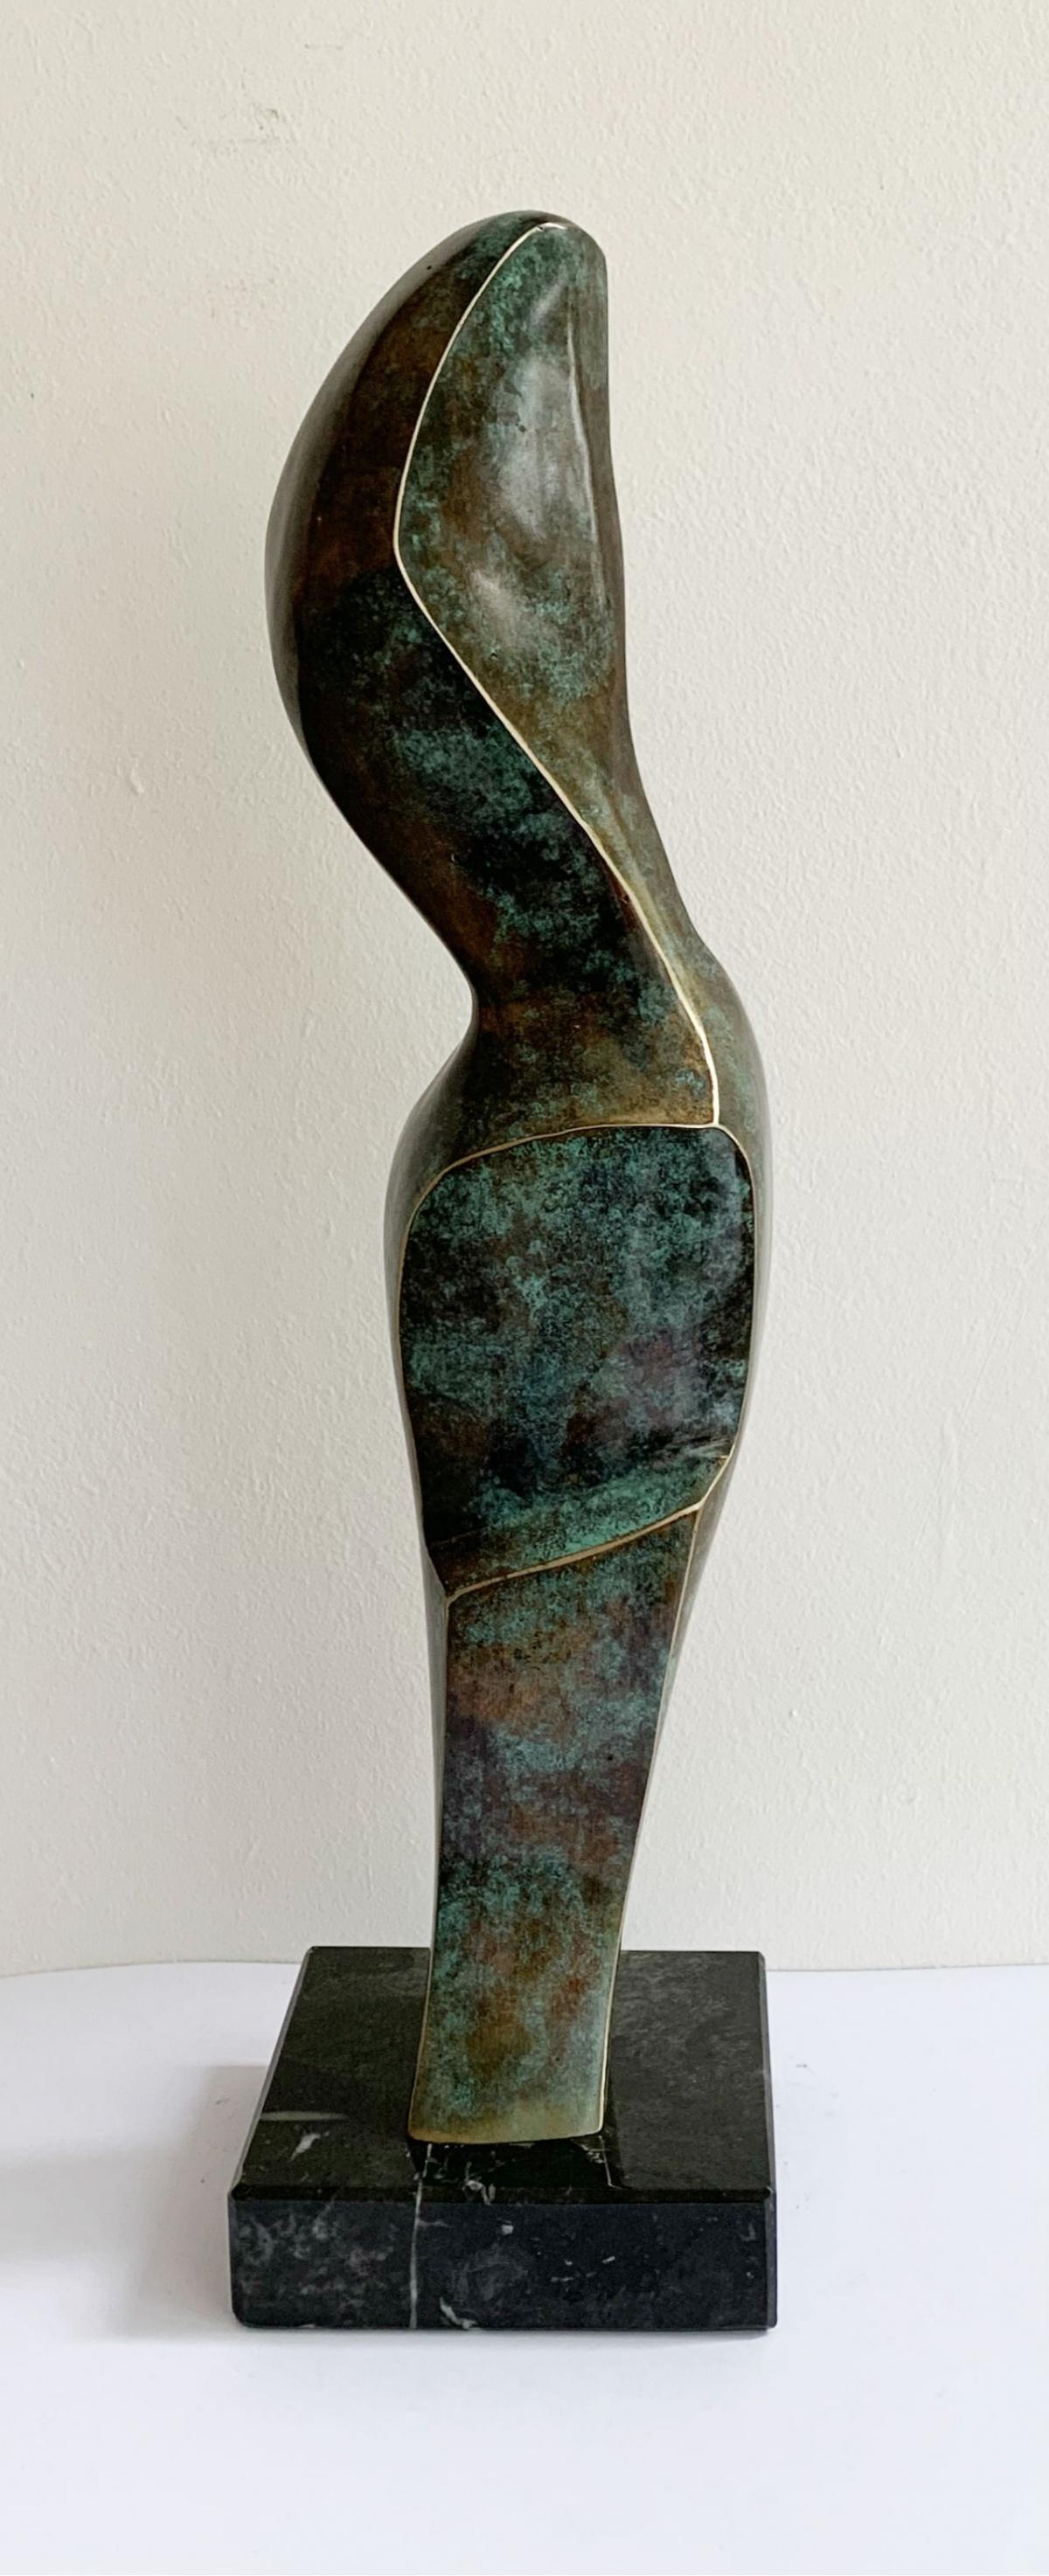 Dame III - XXI century Contemporary bronze sculpture, Abstract & figurative - Gold Figurative Sculpture by Stanisław Wysocki